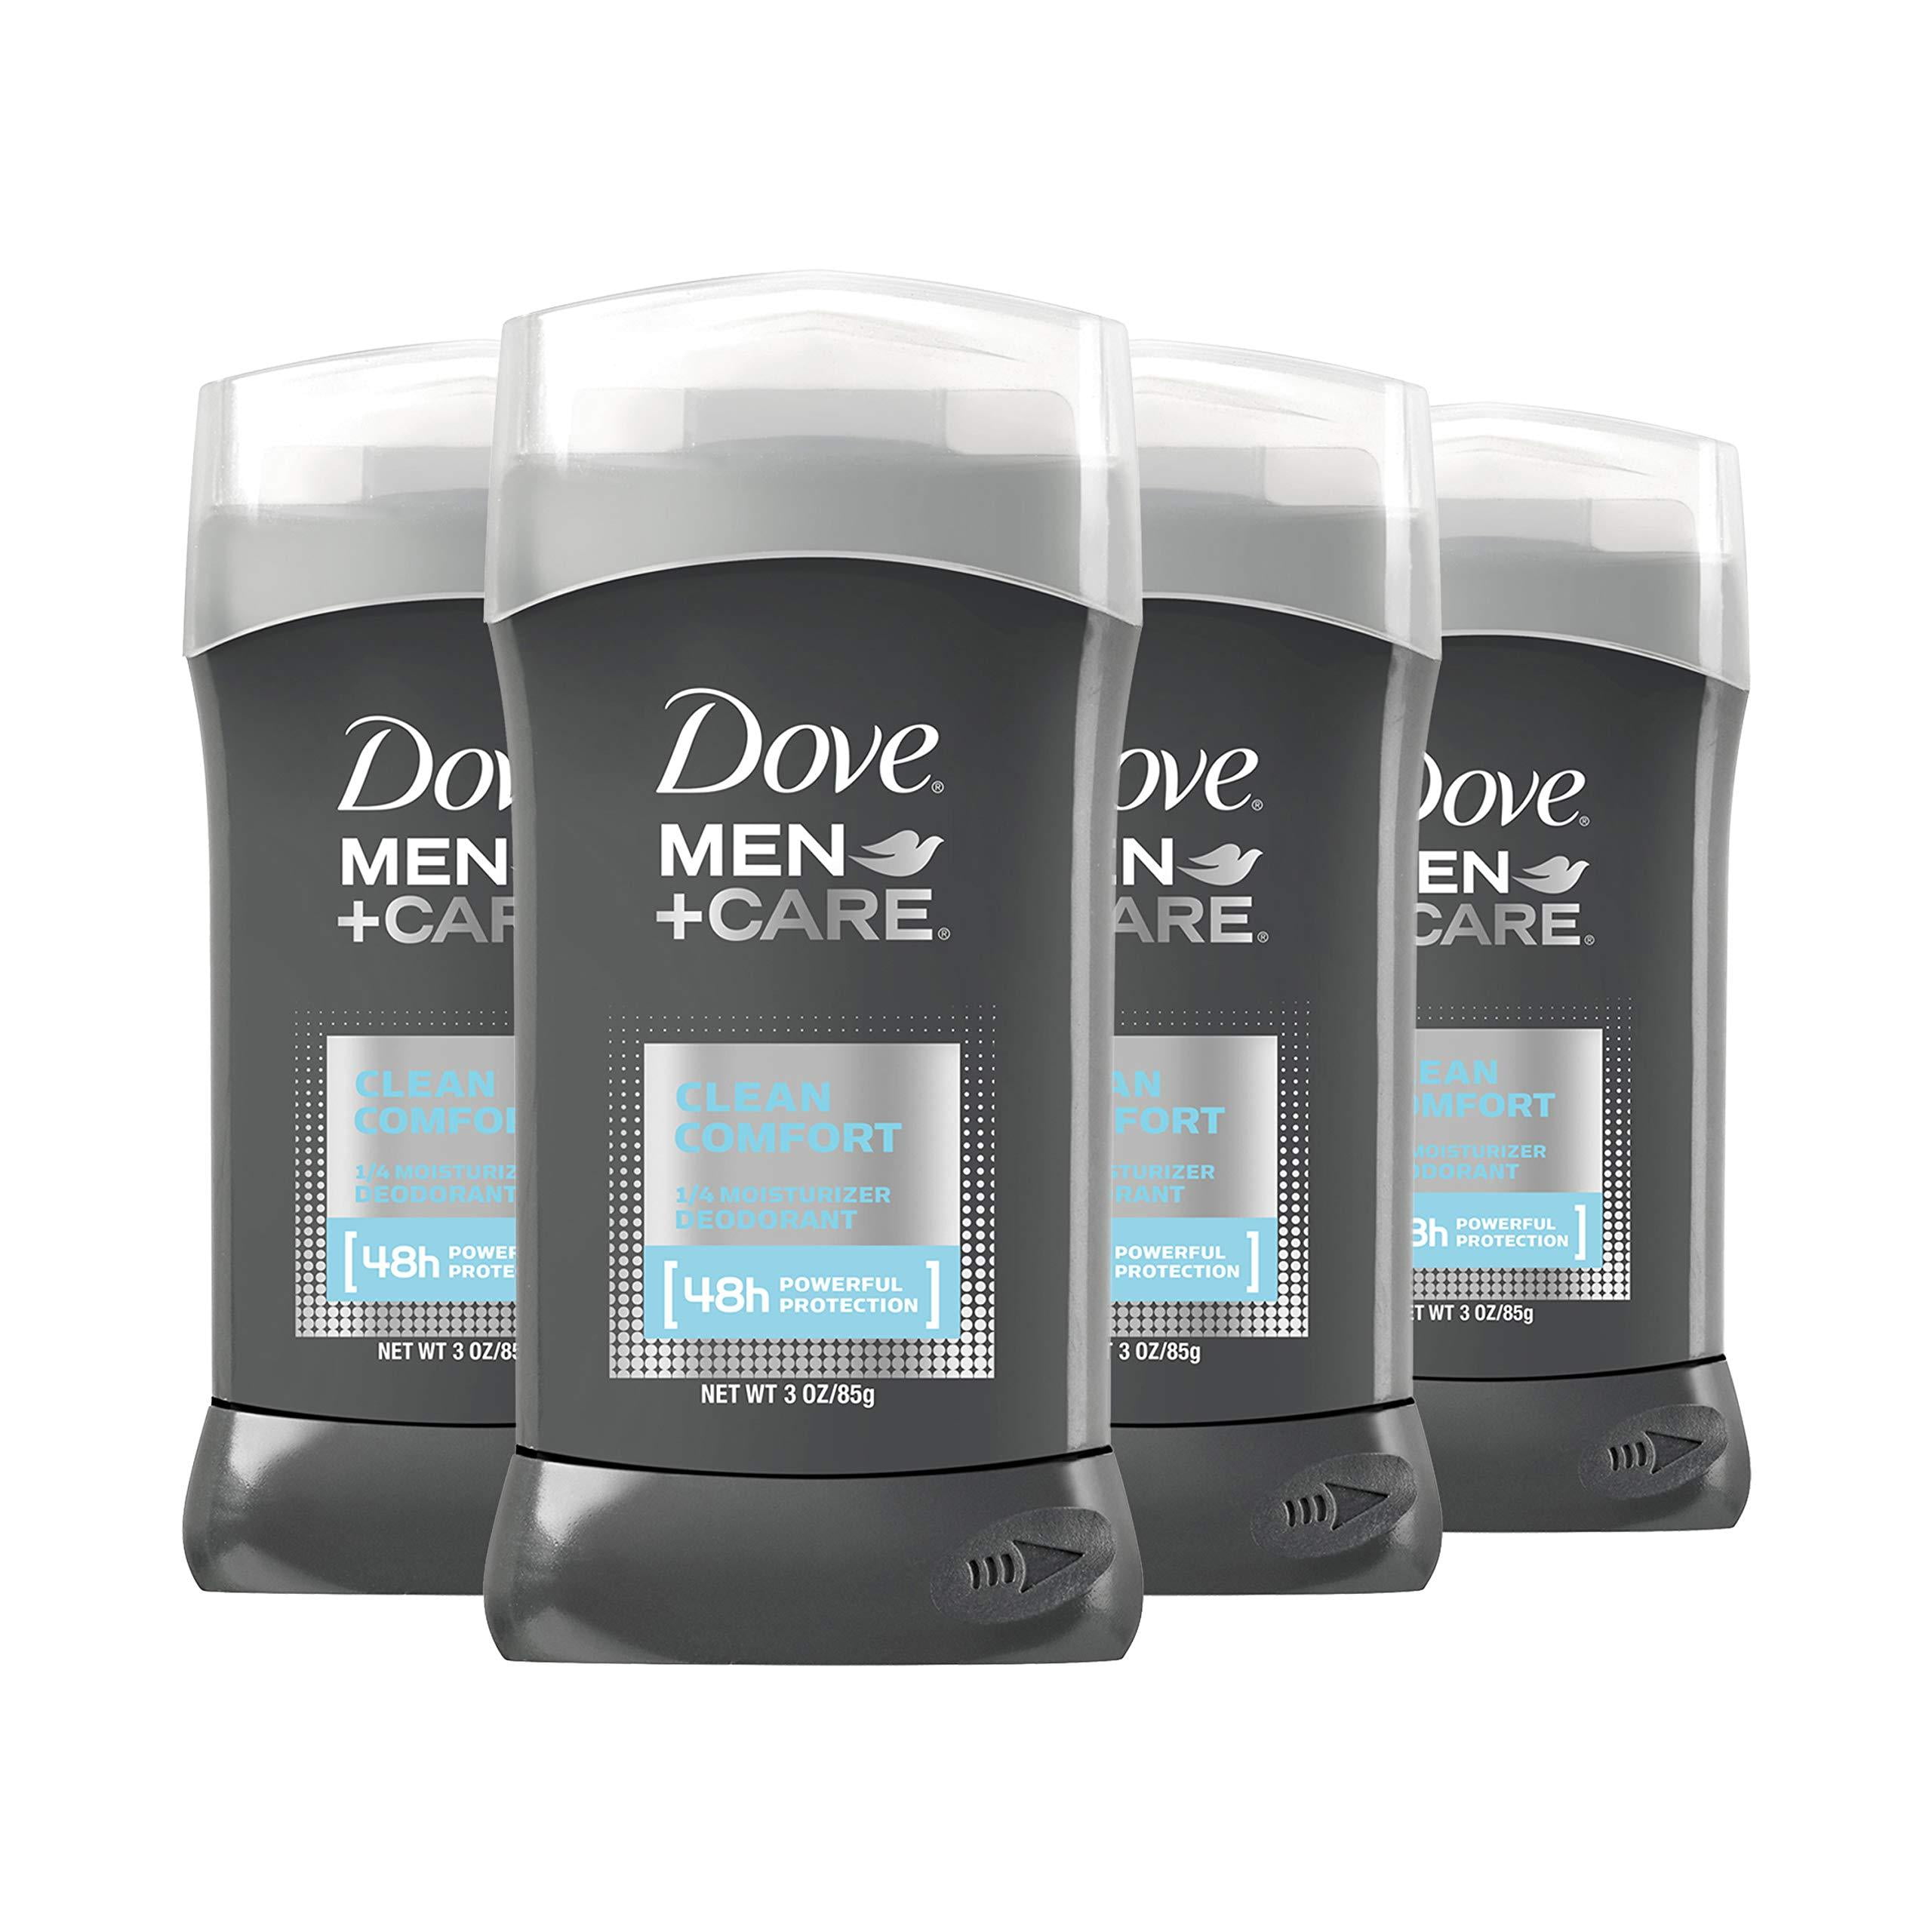 Dove Men+Care Deodorant 48-hour Odor Protection Clean Comfort Deodorant ...